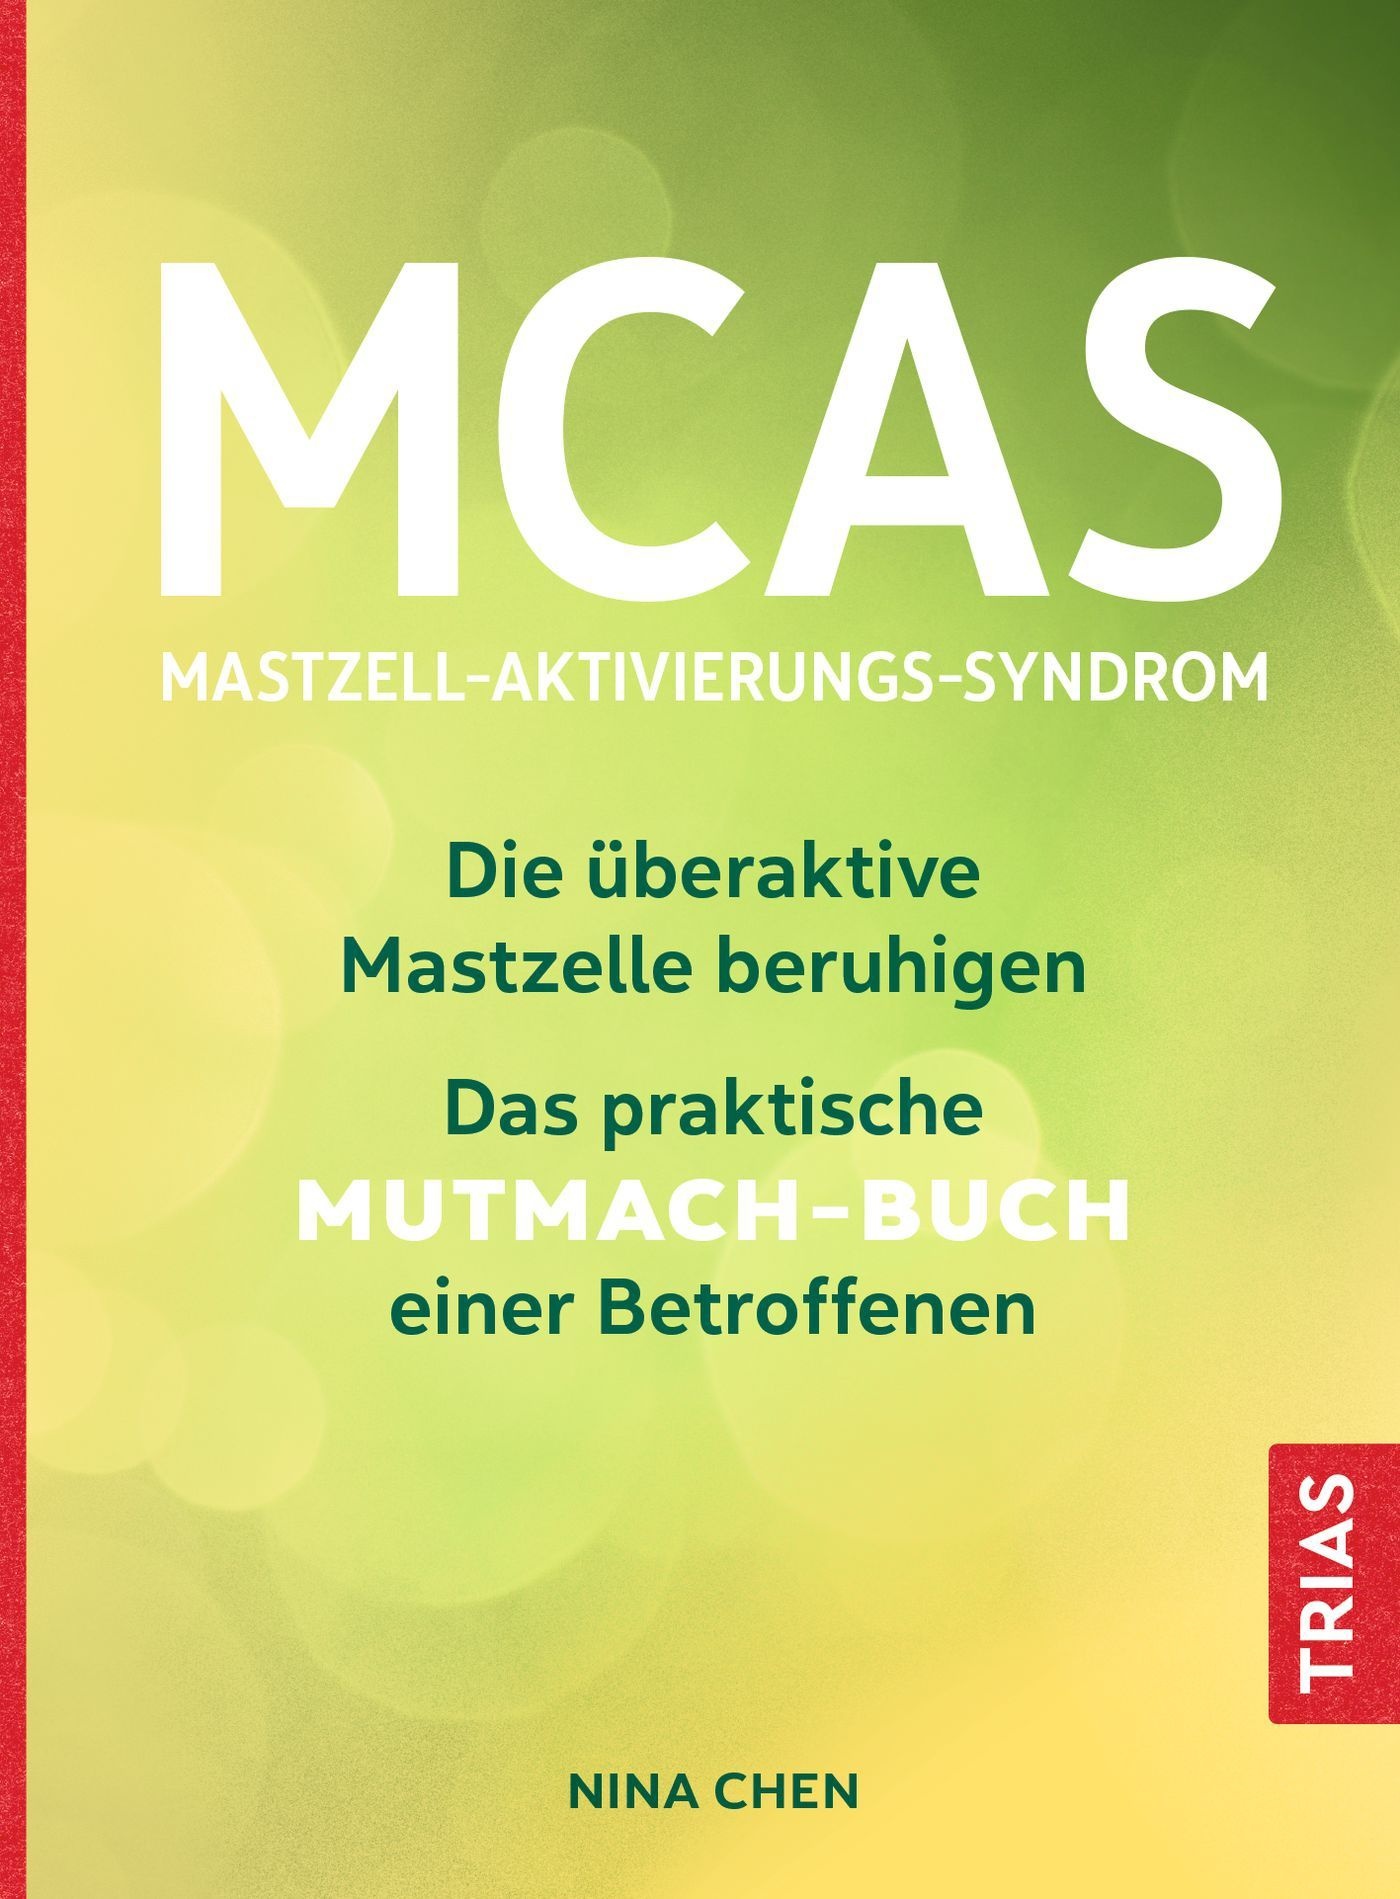 Mcas - Mastzell-Aktivierungs-Syndrom 1 St Buch